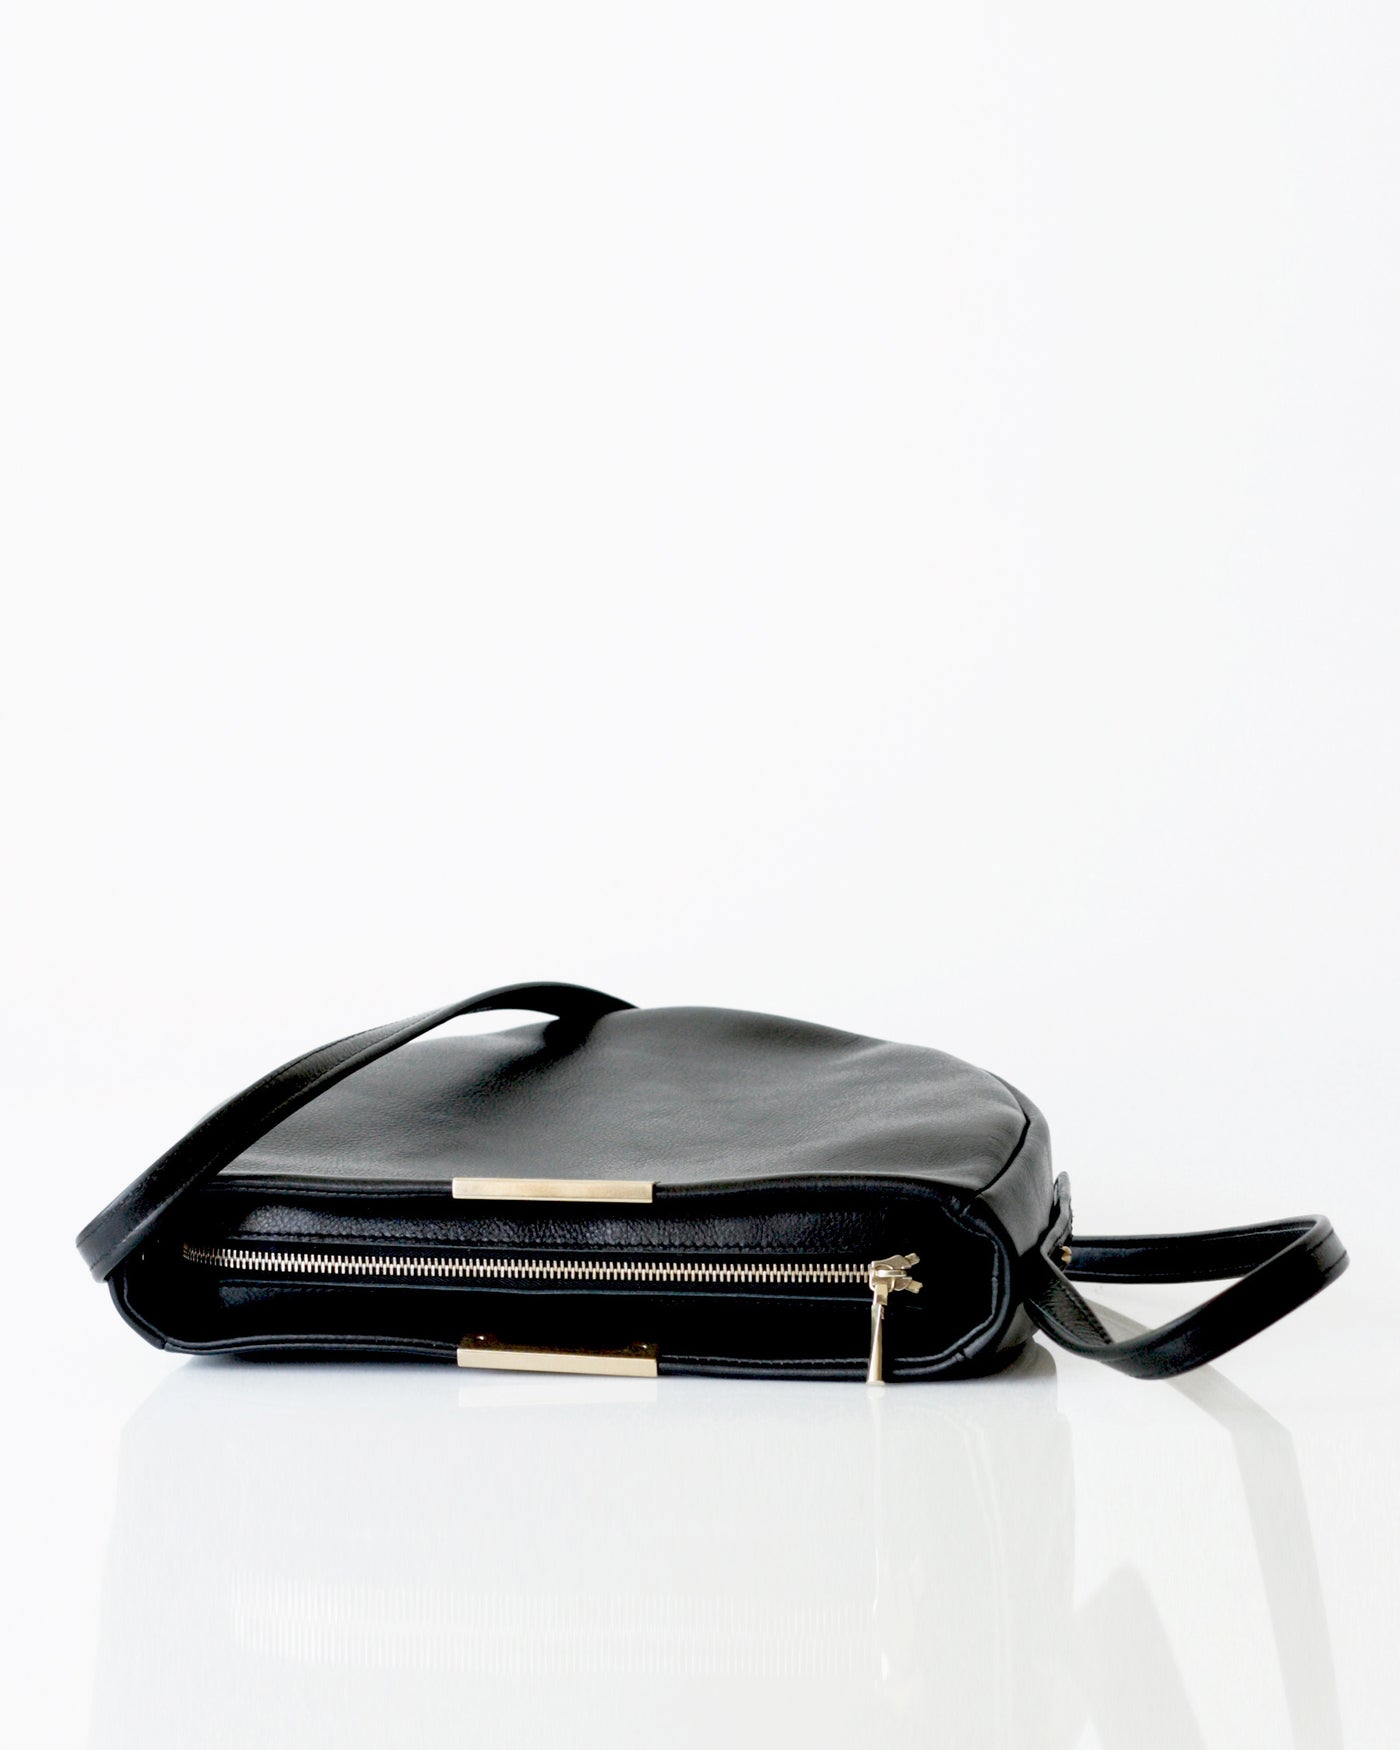 Meena Saddle Bag - OPELLE bag opelle handbag opellecreative